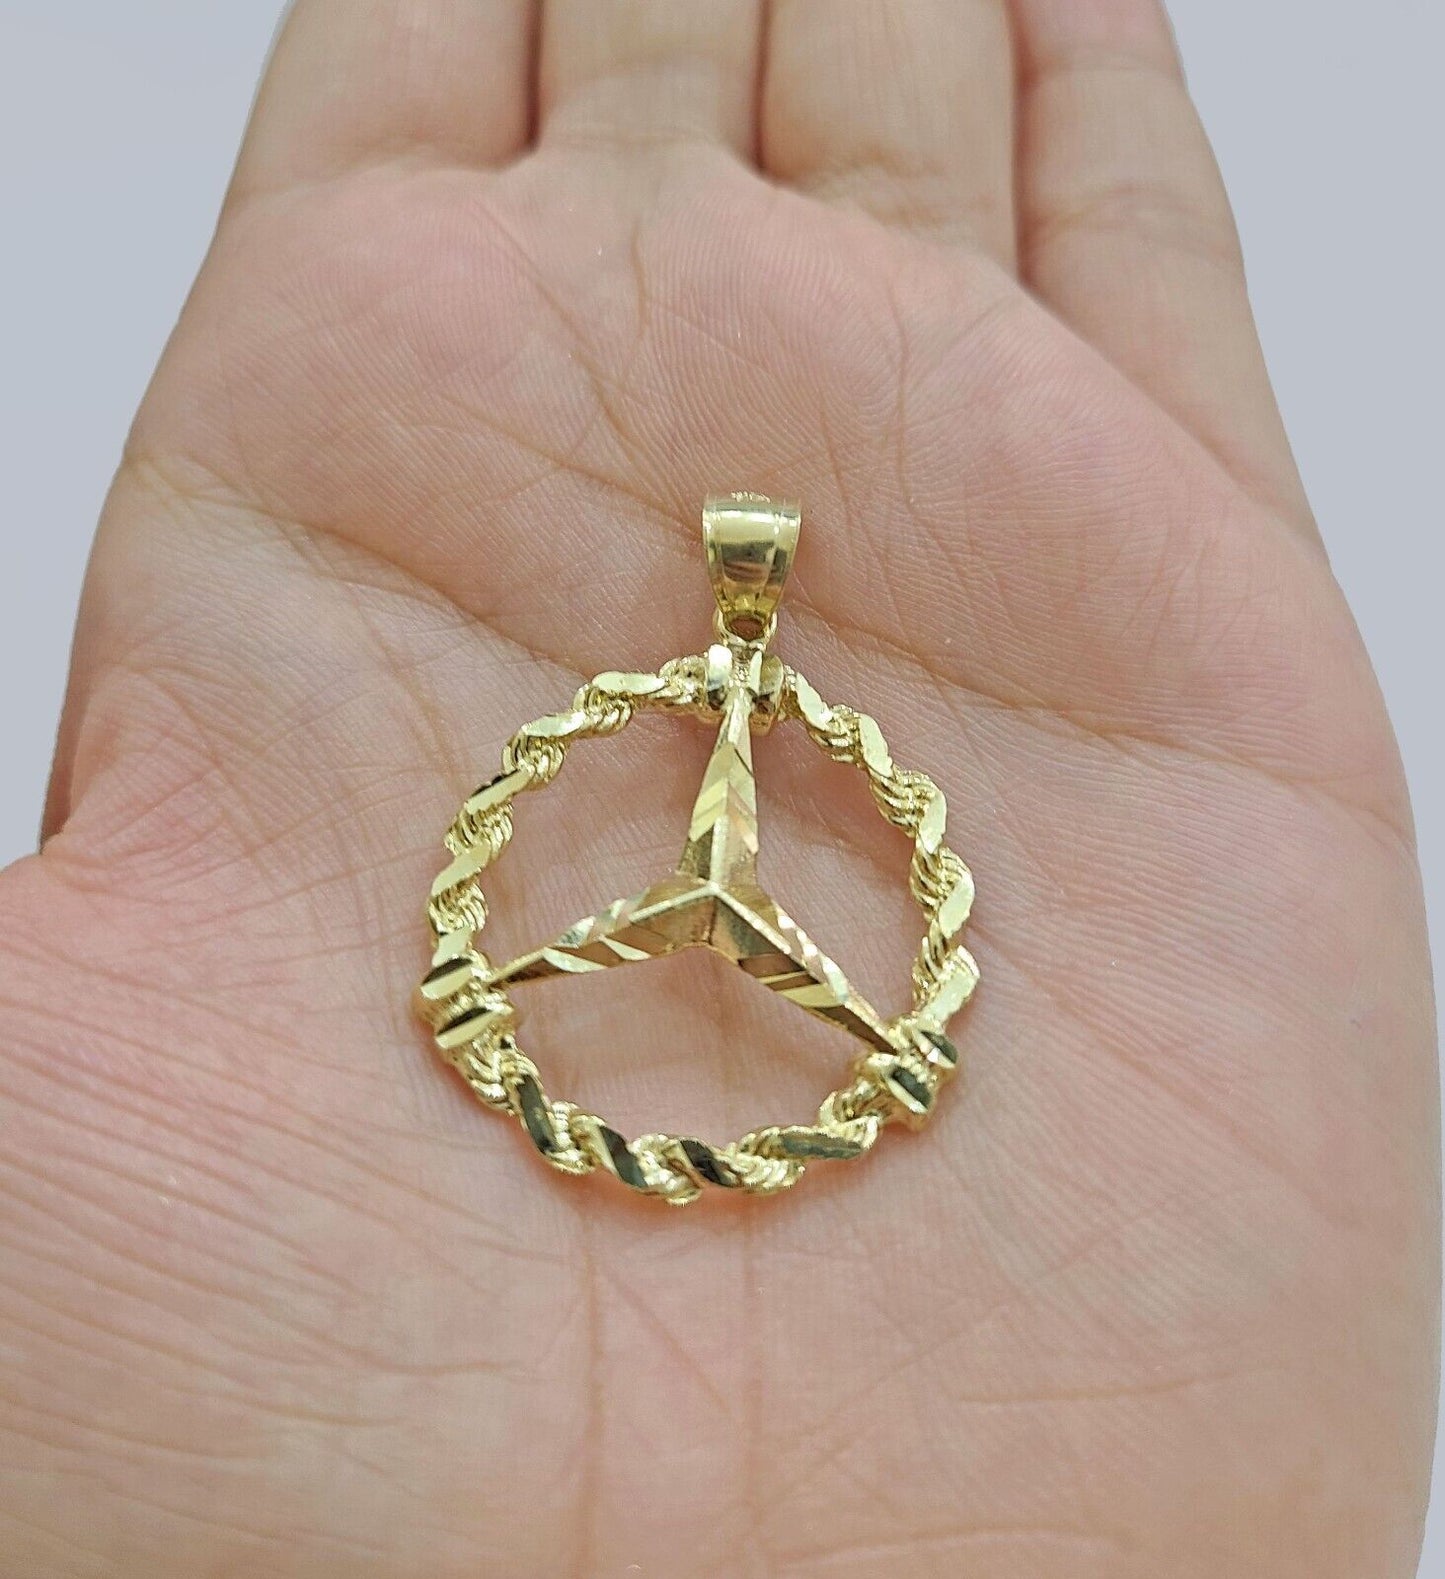 Real 10kt Yellow Gold Circular Rope Pendant Charm